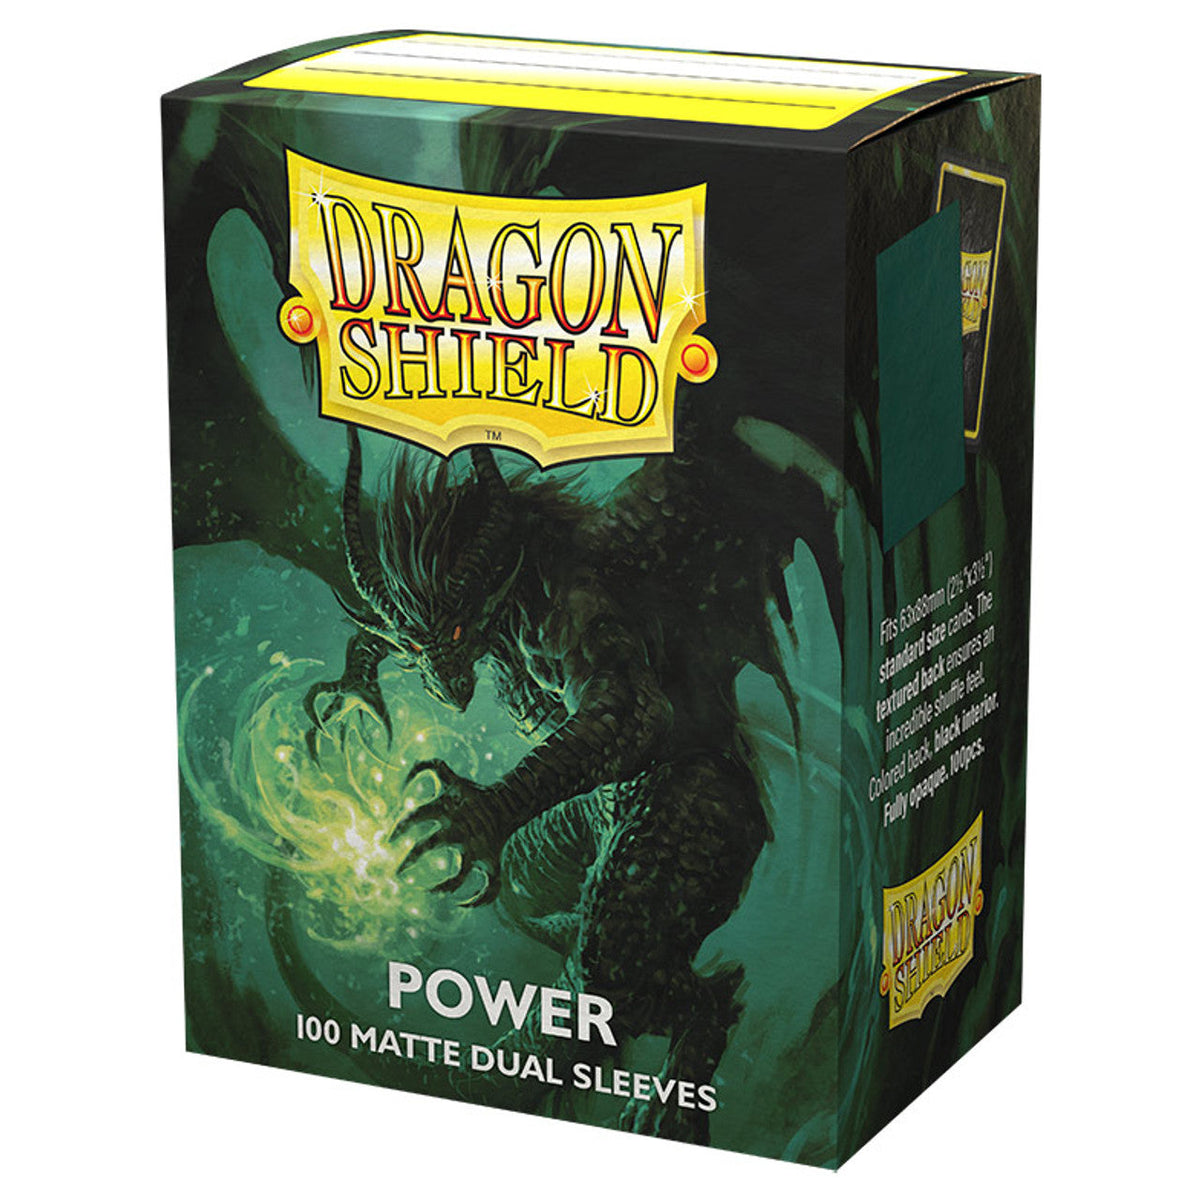 Dragon Shield Sleeve Dual Matte Standard Size 100pcs - Power-Dragon Shield-Ace Cards &amp; Collectibles